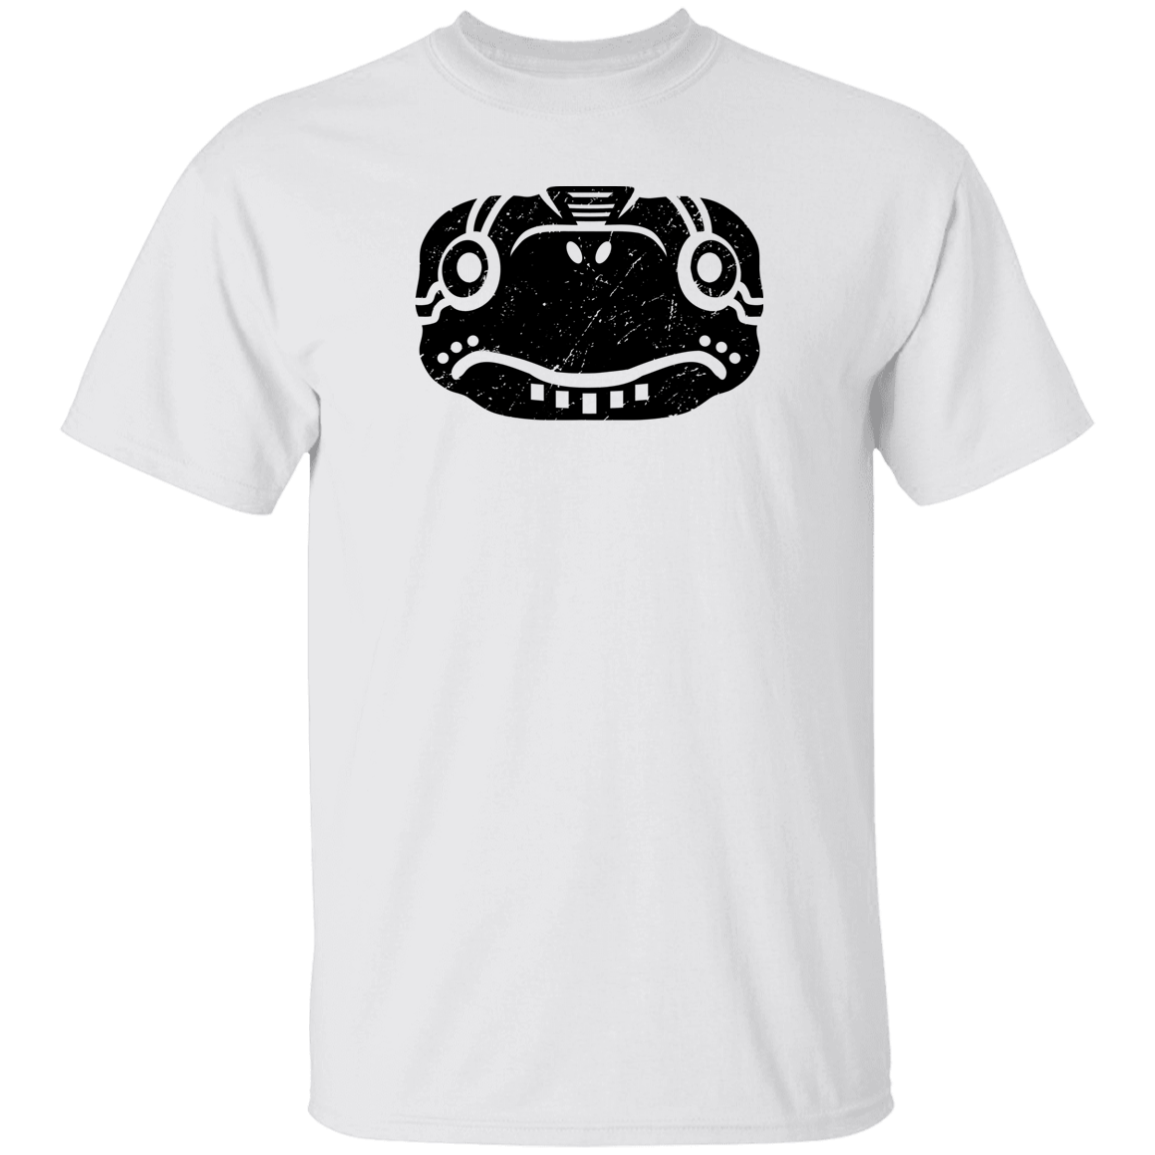 Black Distressed Emblem T-Shirt for Kids (Turtle/Pearl)